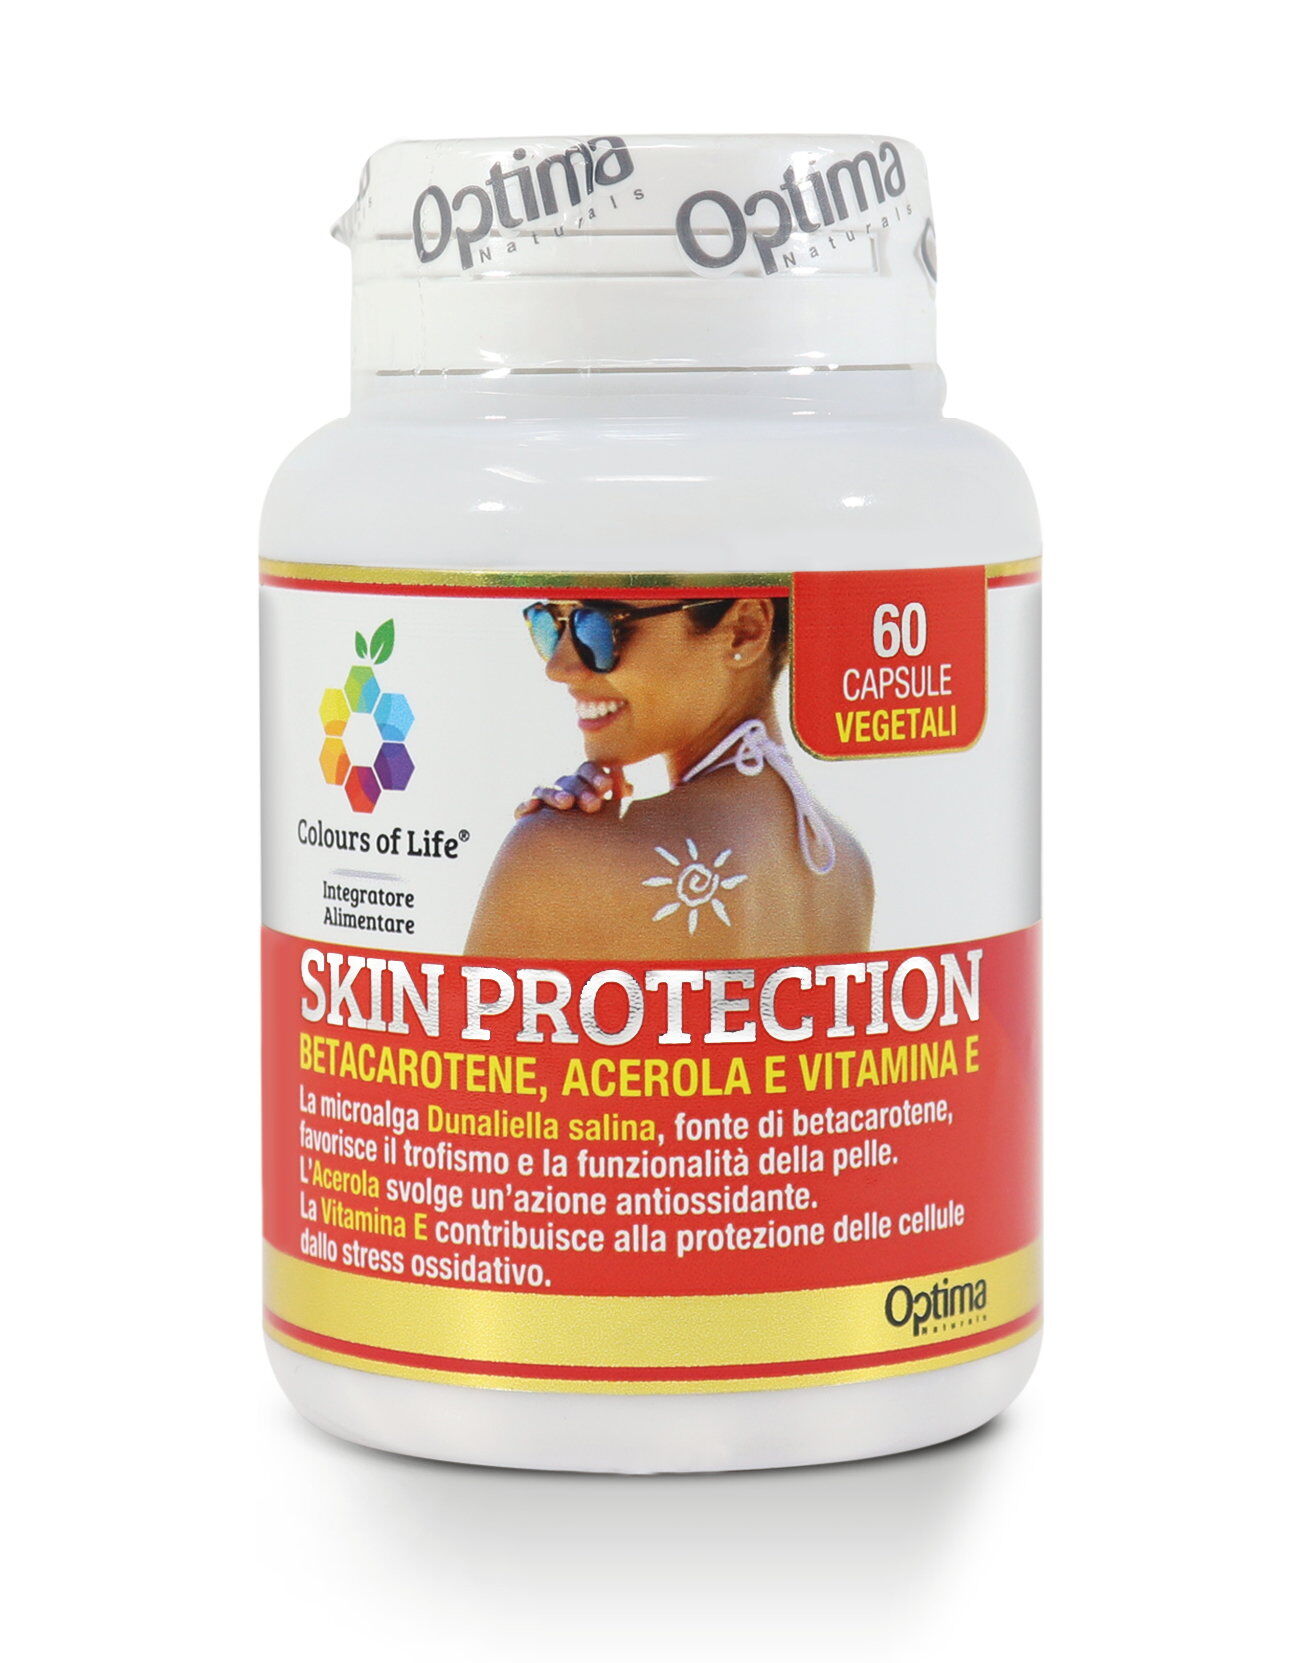 optima skin protection 60 capsule vegetali